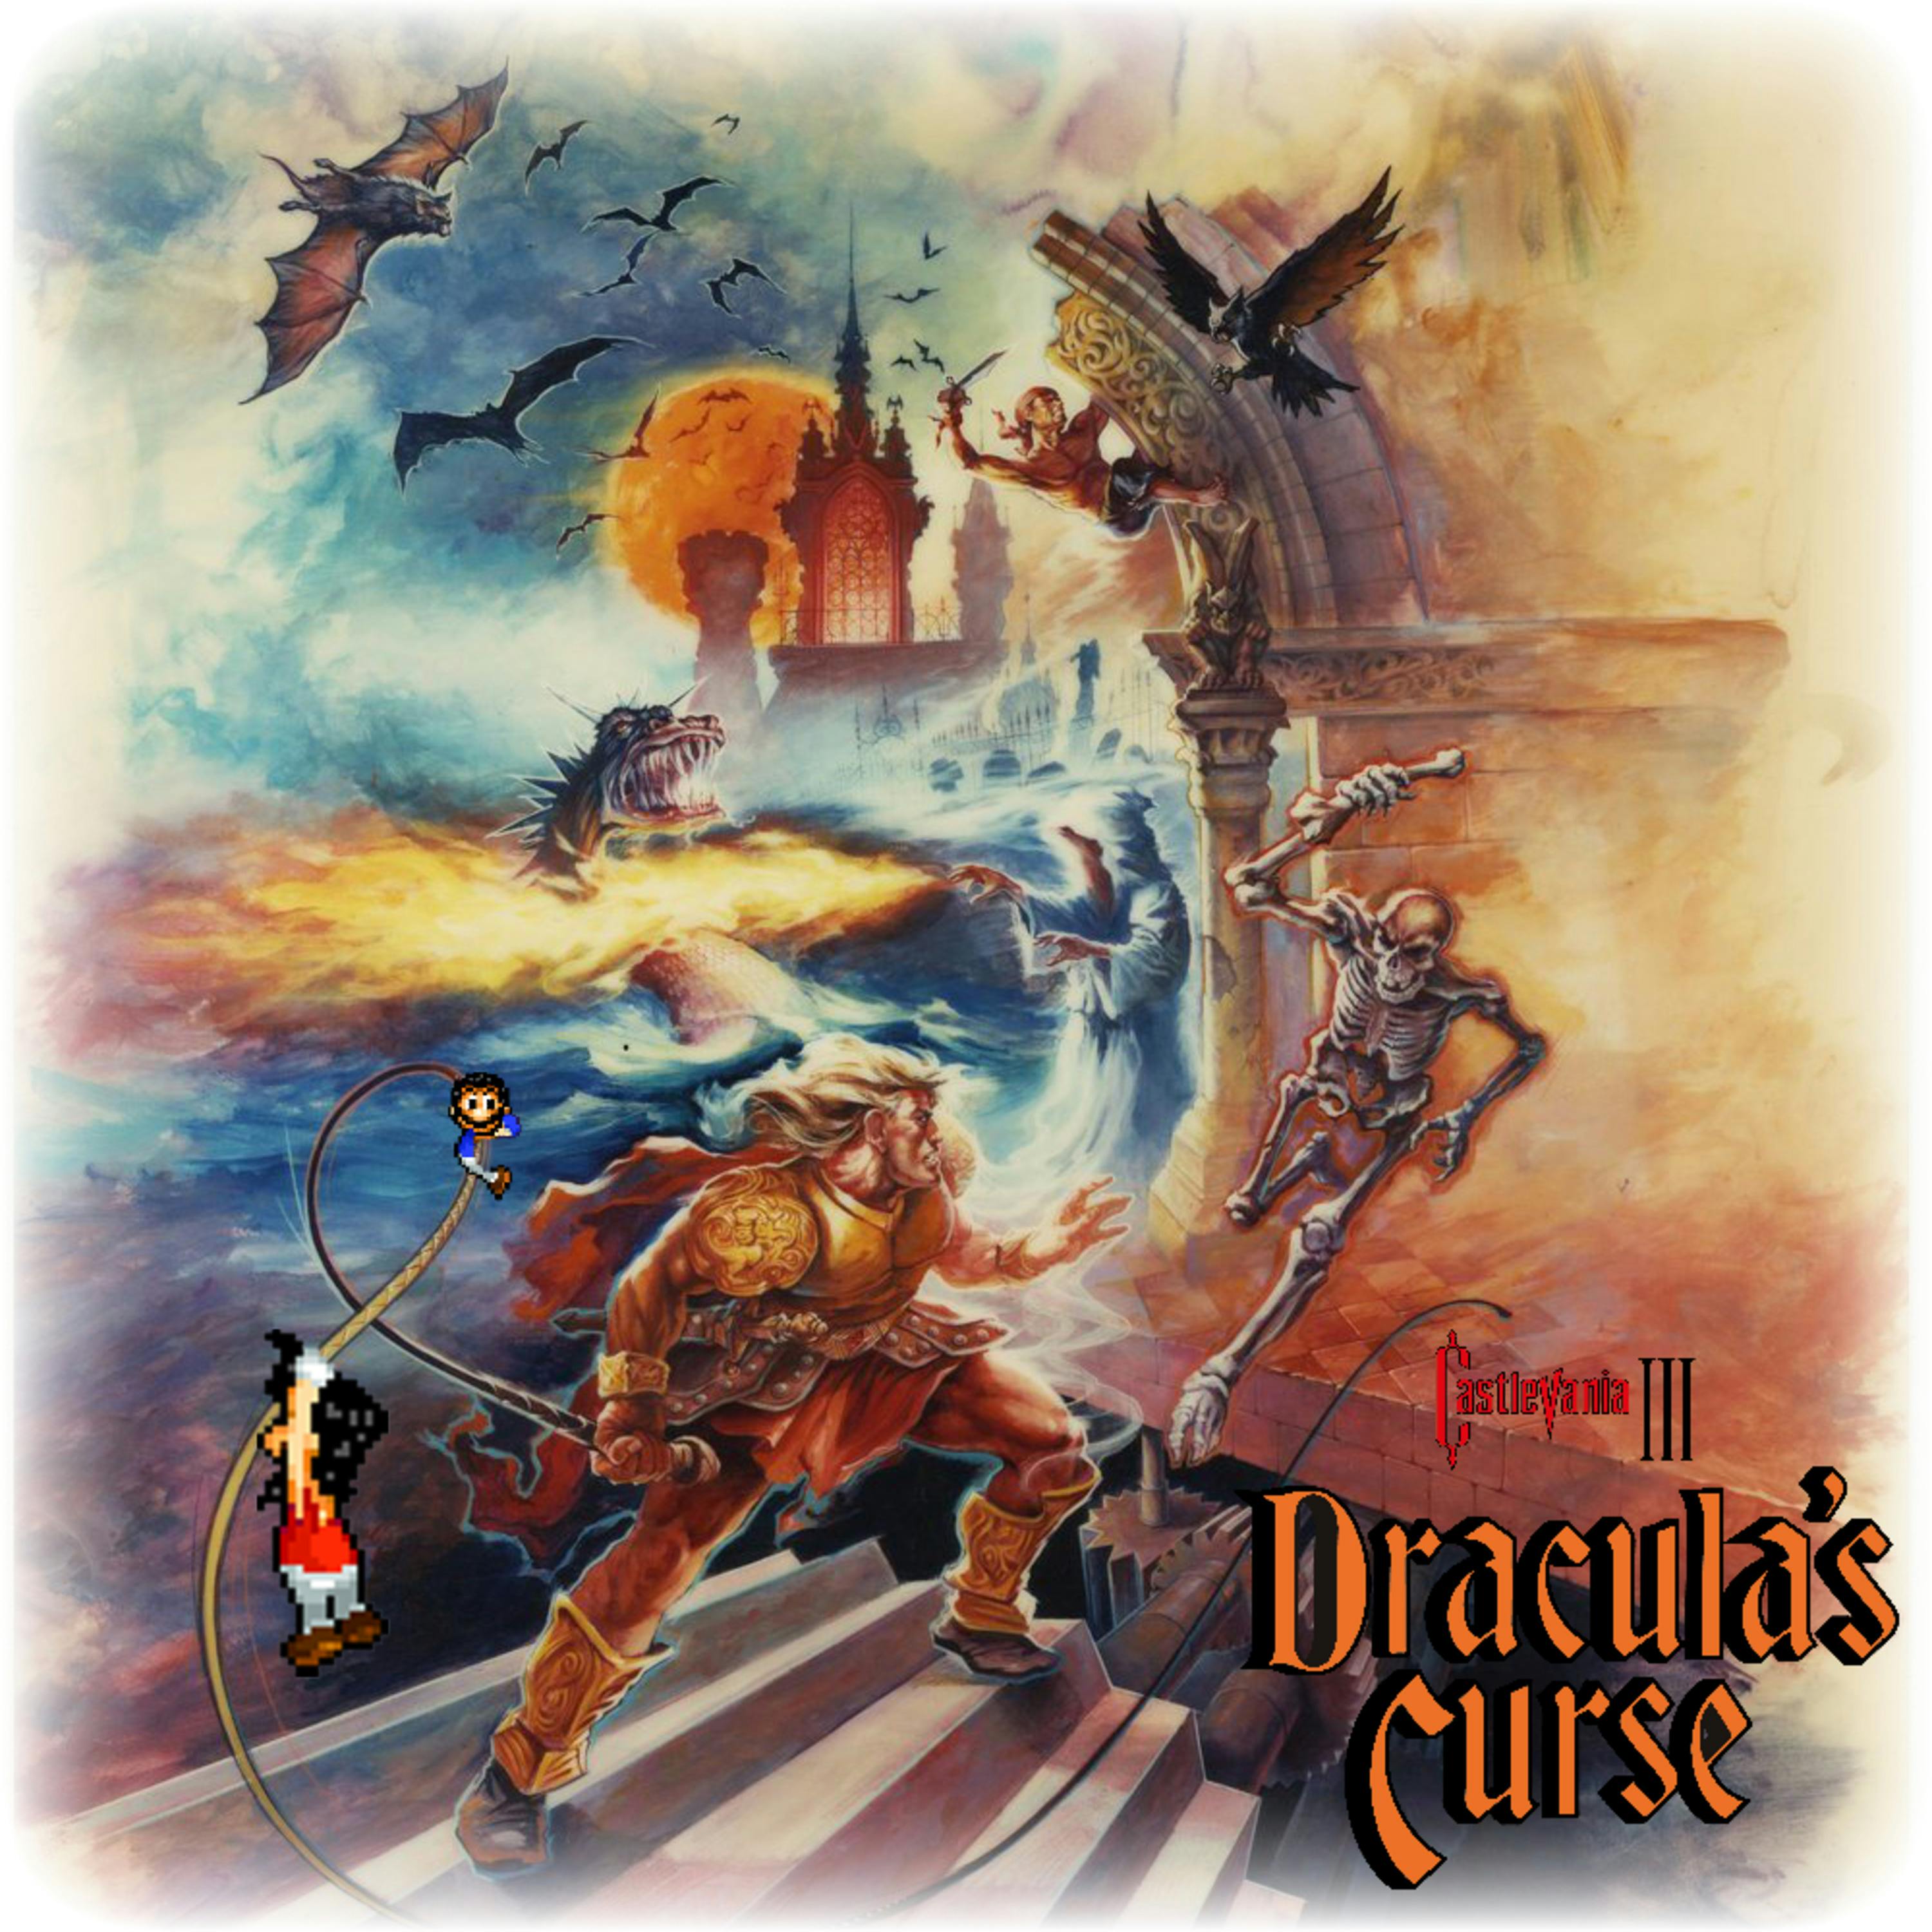 209 - Castlevania III: Dracula’s Curse